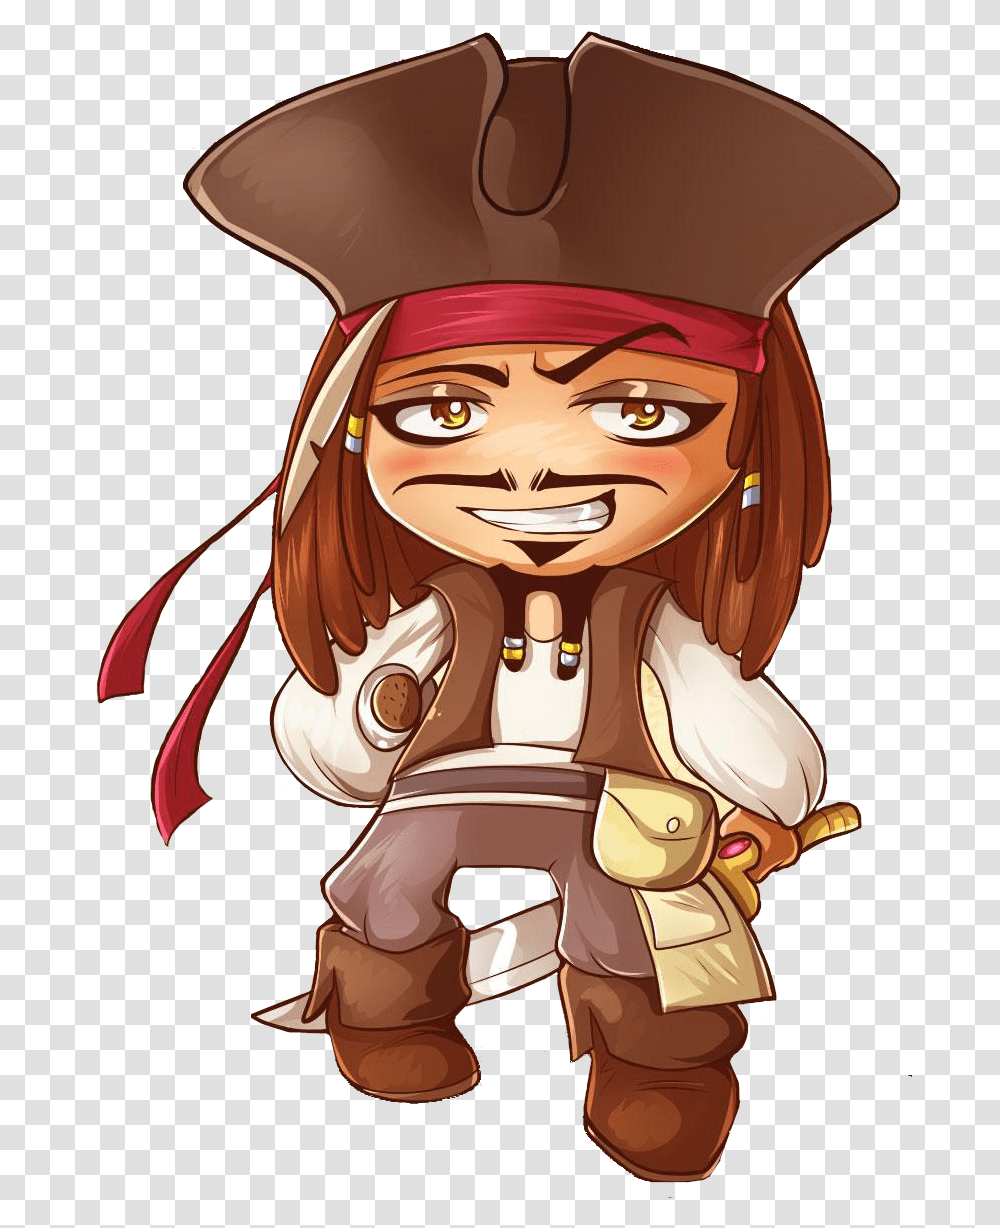 Jack Sparrow Chibi Download Captain Jack Sparrow Chibi, Pirate, Toy, Costume Transparent Png